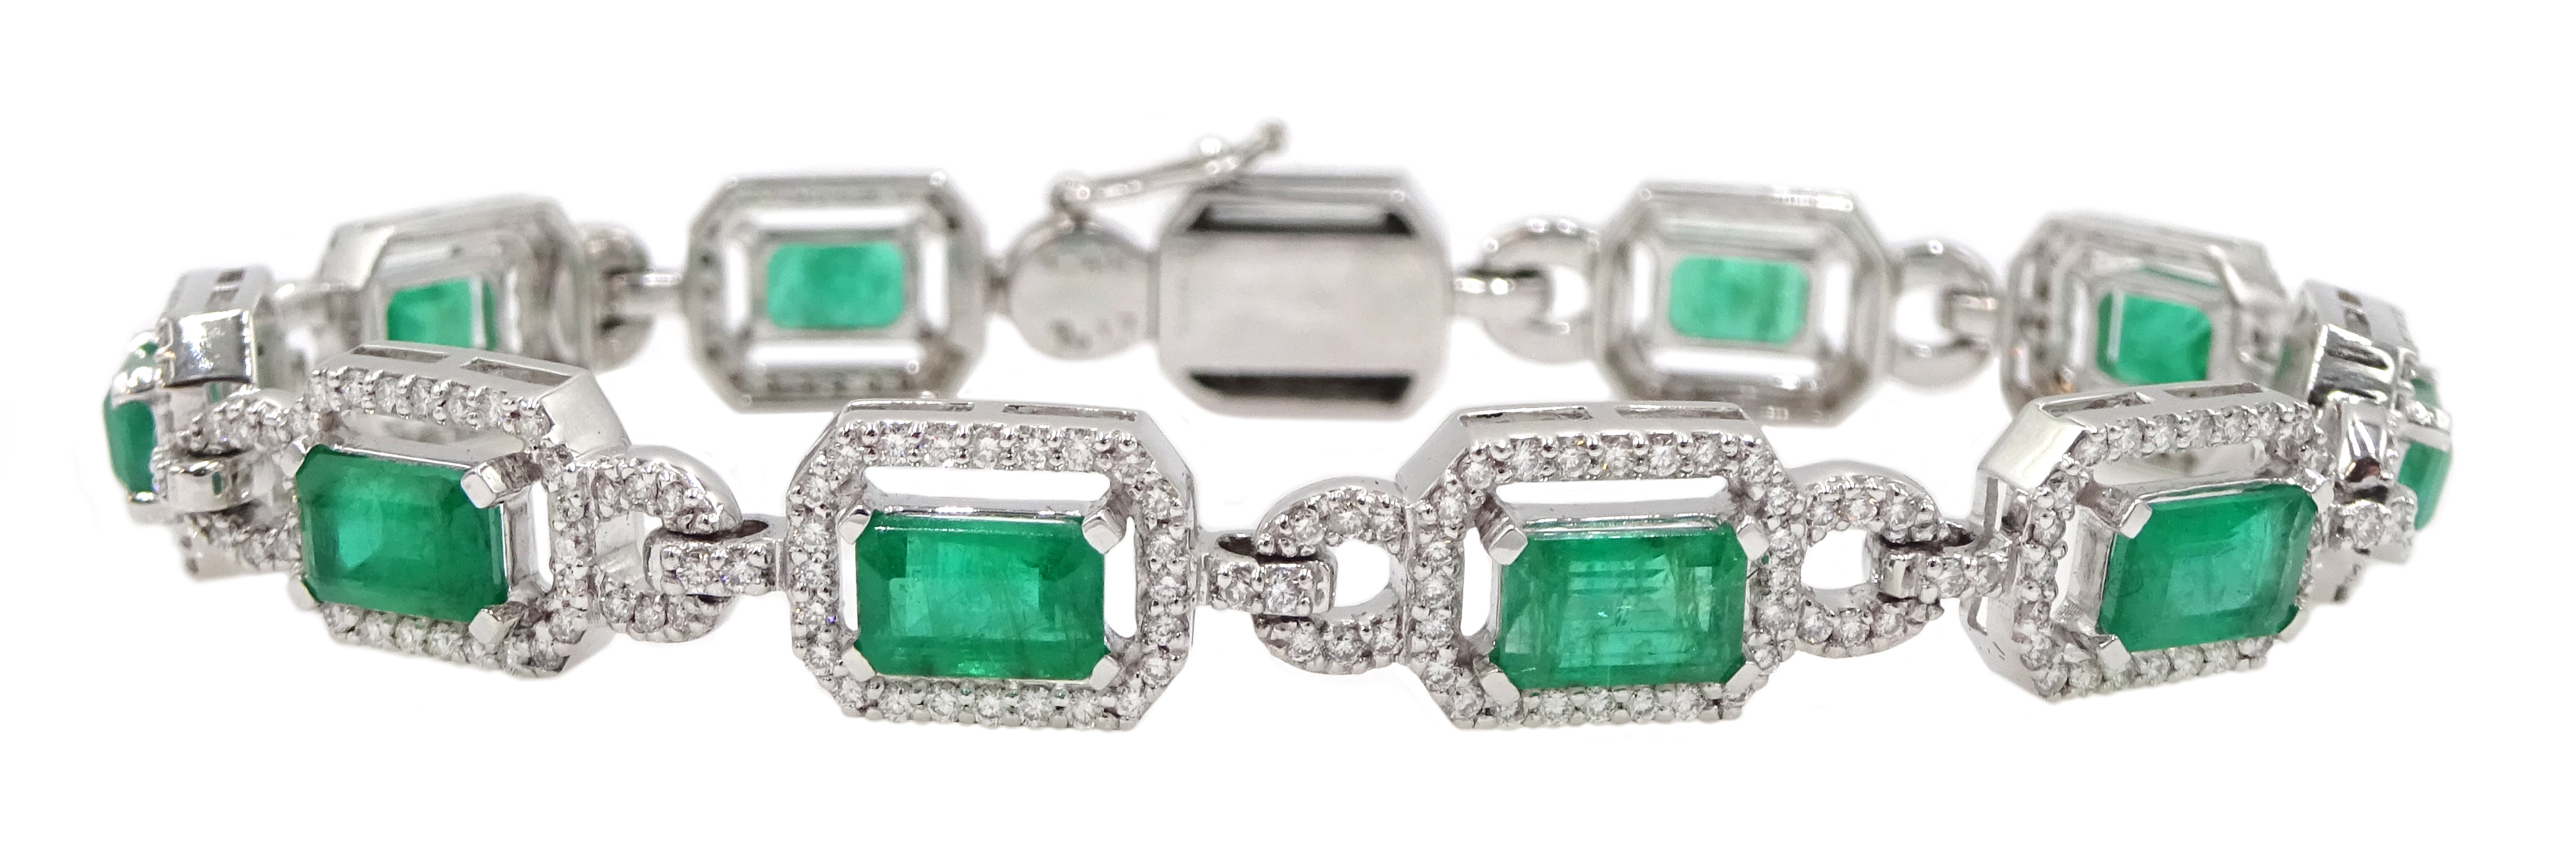 18ct white gold emerald cut emerald and round brilliant cut diamond bracelet, hallmarked, emerald